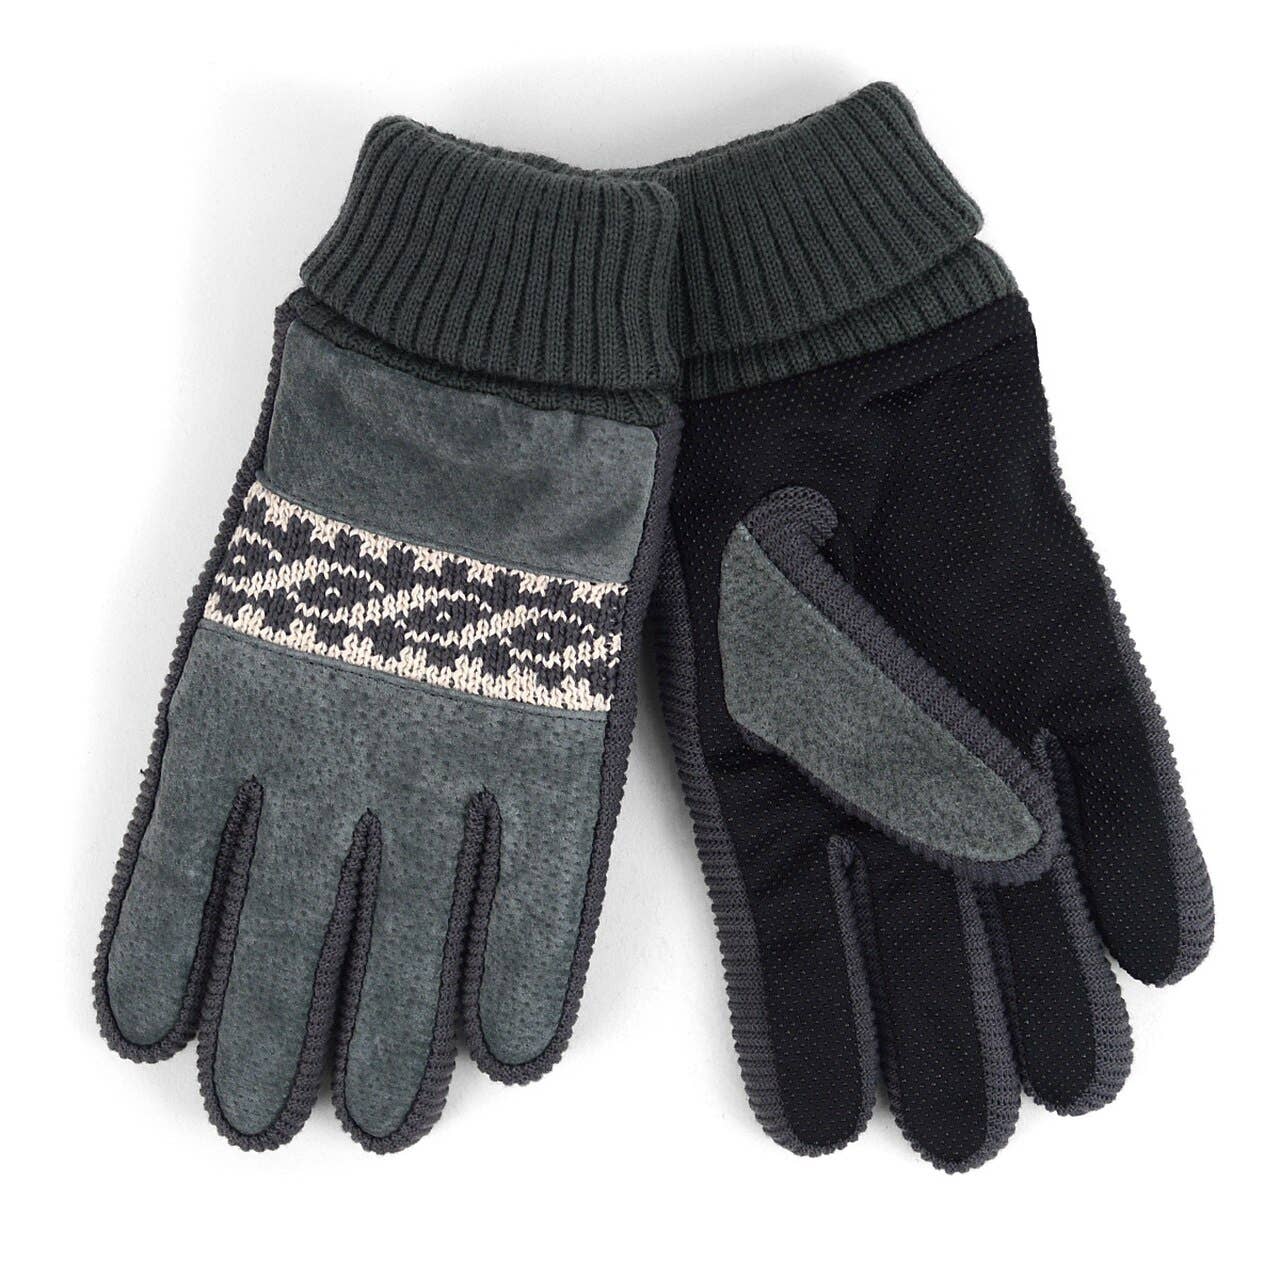 Men's Genuine Leather Non Slip Grip Winter Gloves: Black / S/M